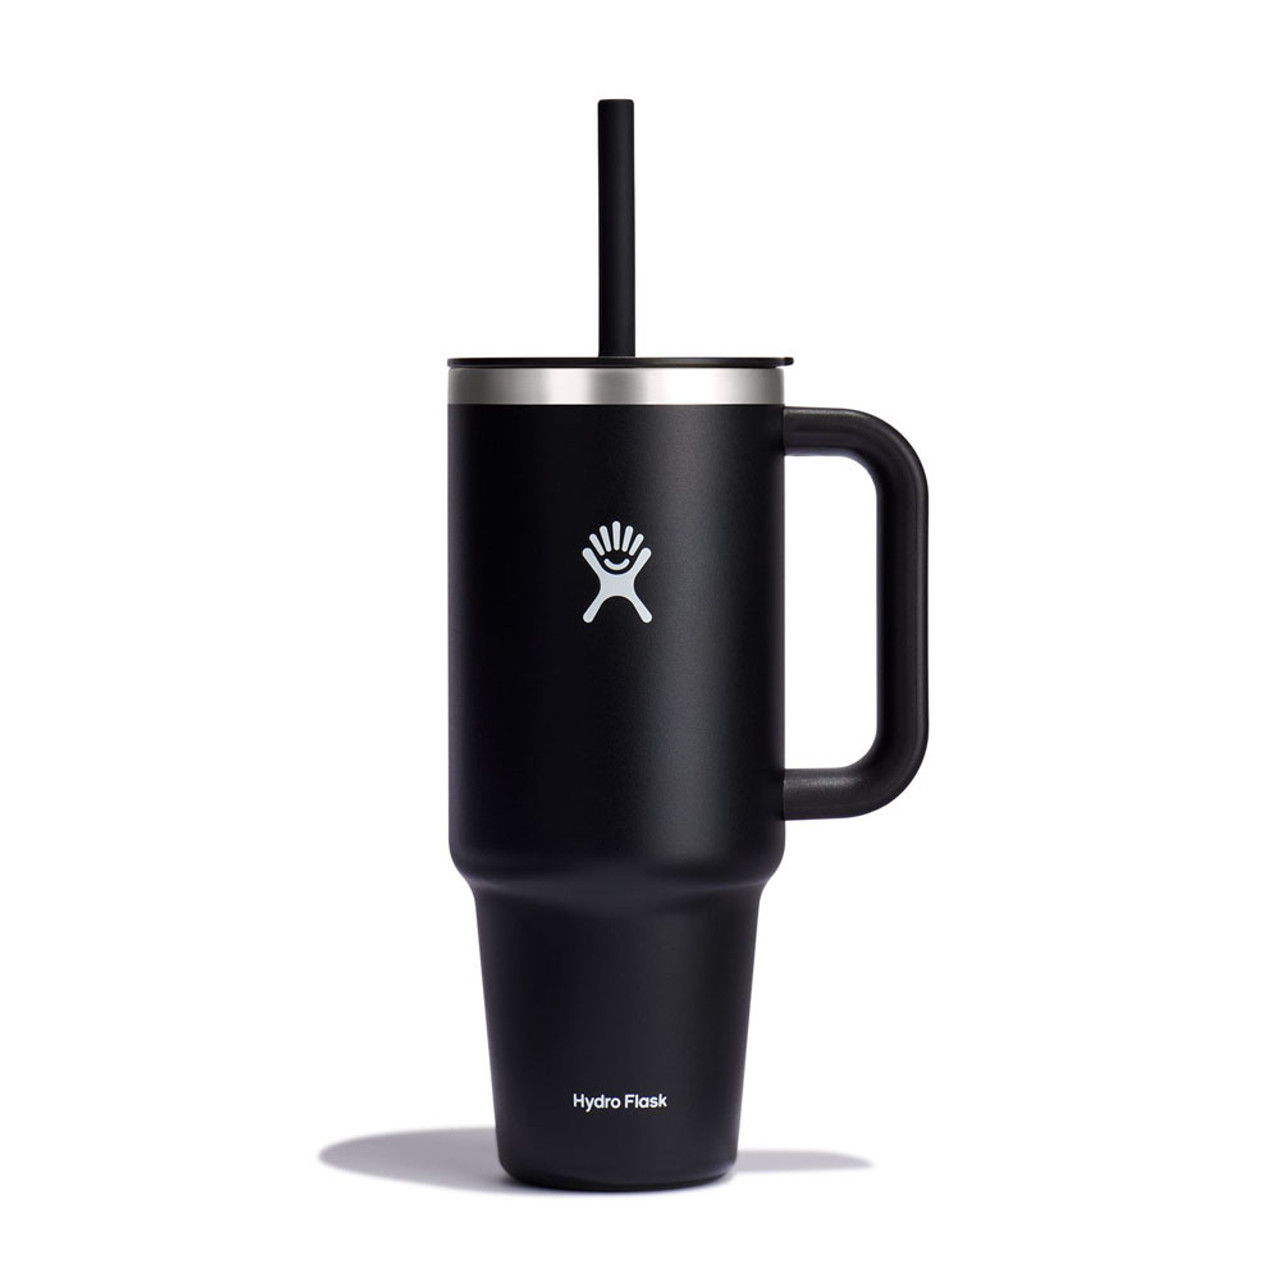 Hydro Flask Mug - Insulated mug, Buy online